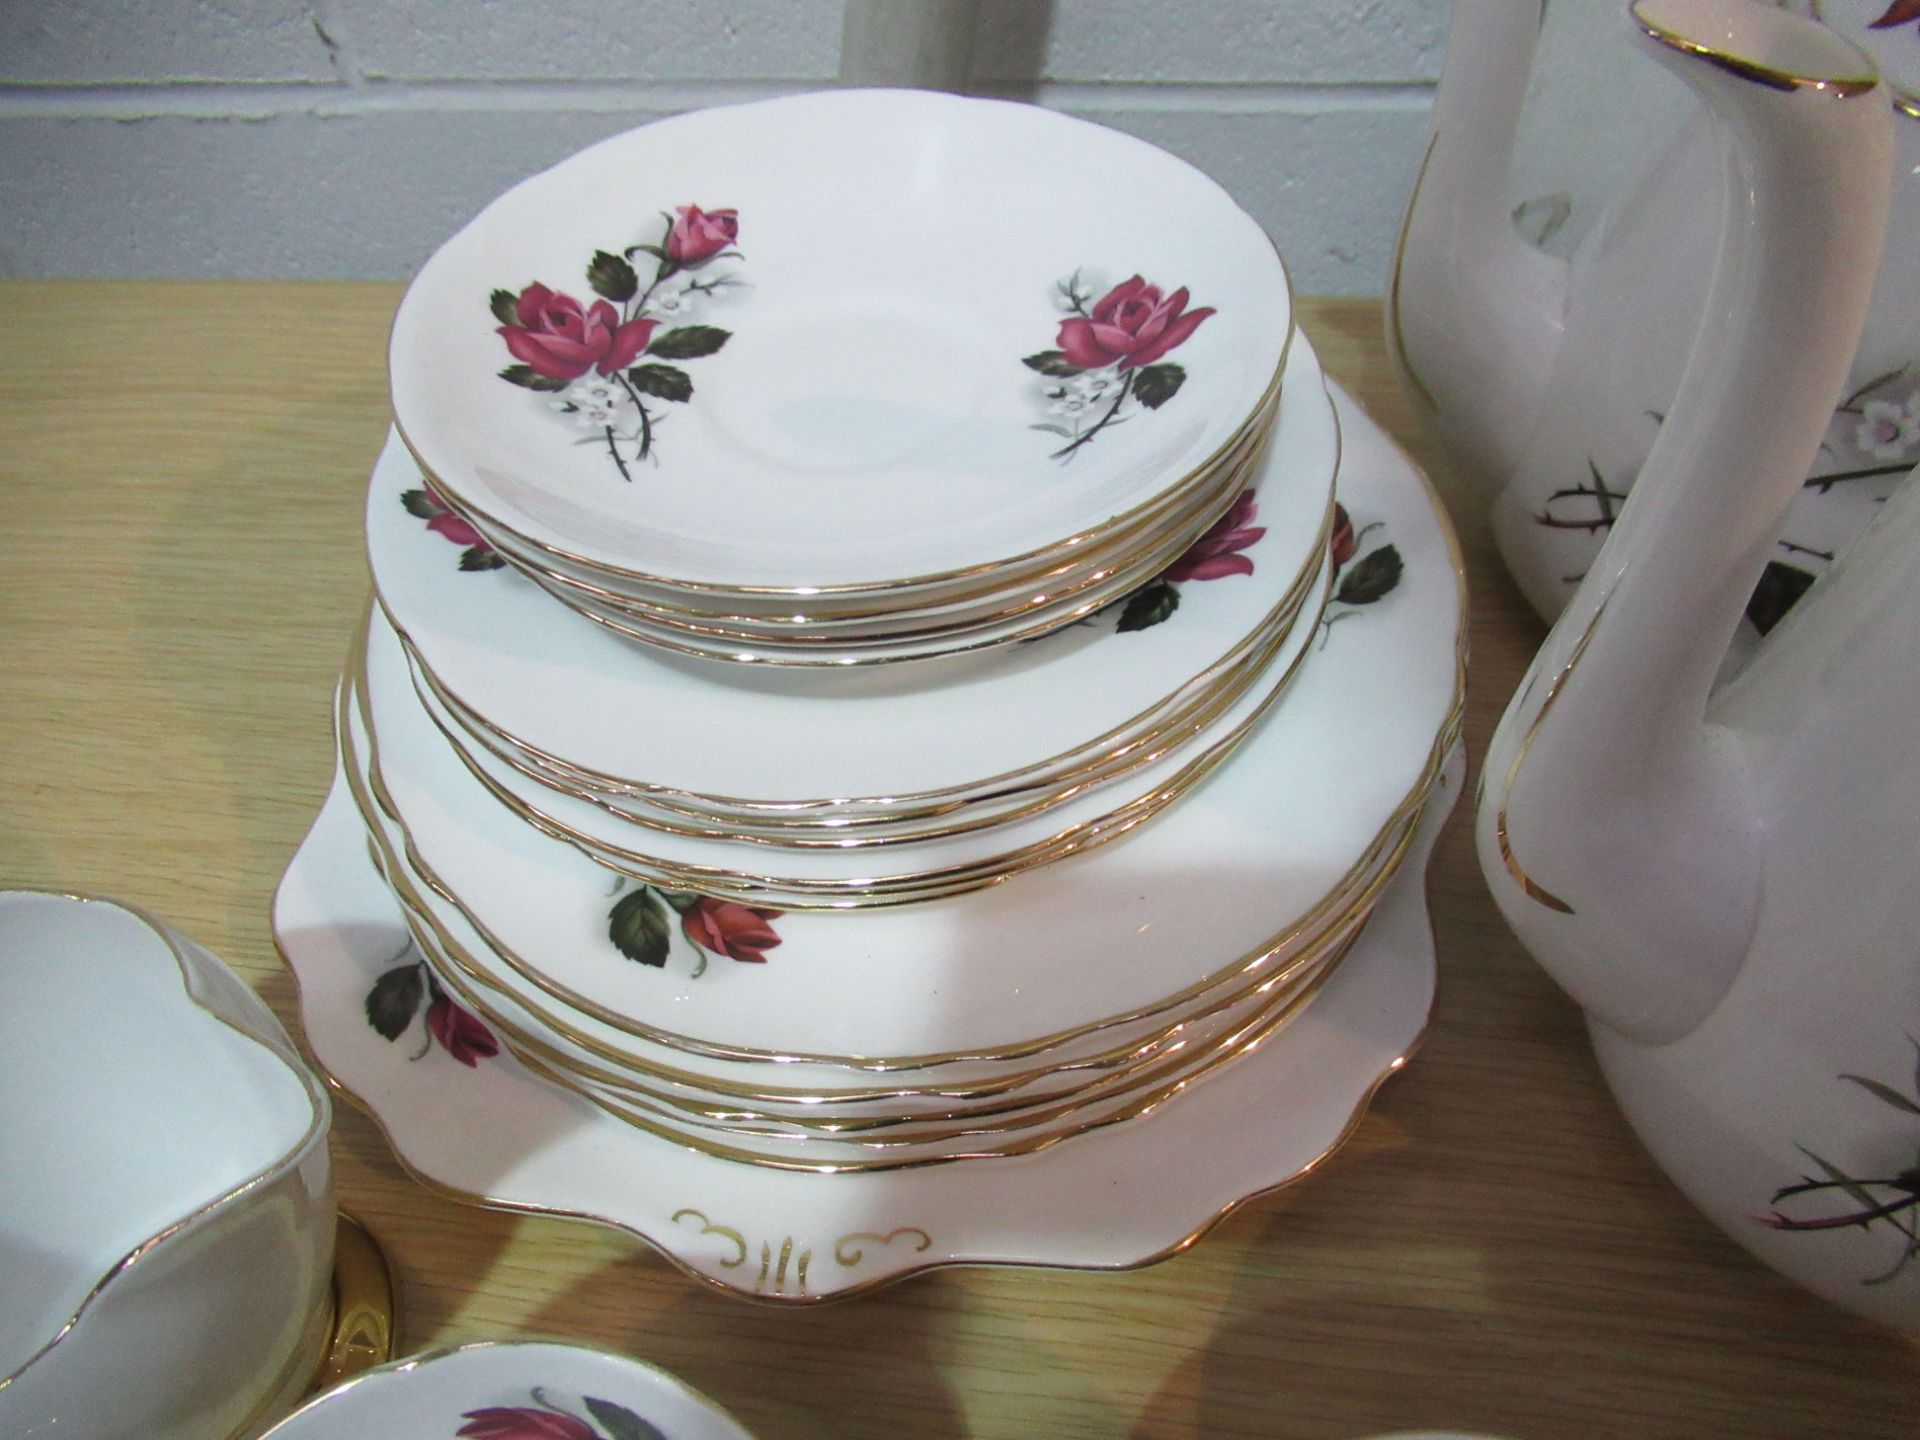 Rose Adorned Tea Service inc. Plates, Teacups, Teapot etc. - Image 2 of 3